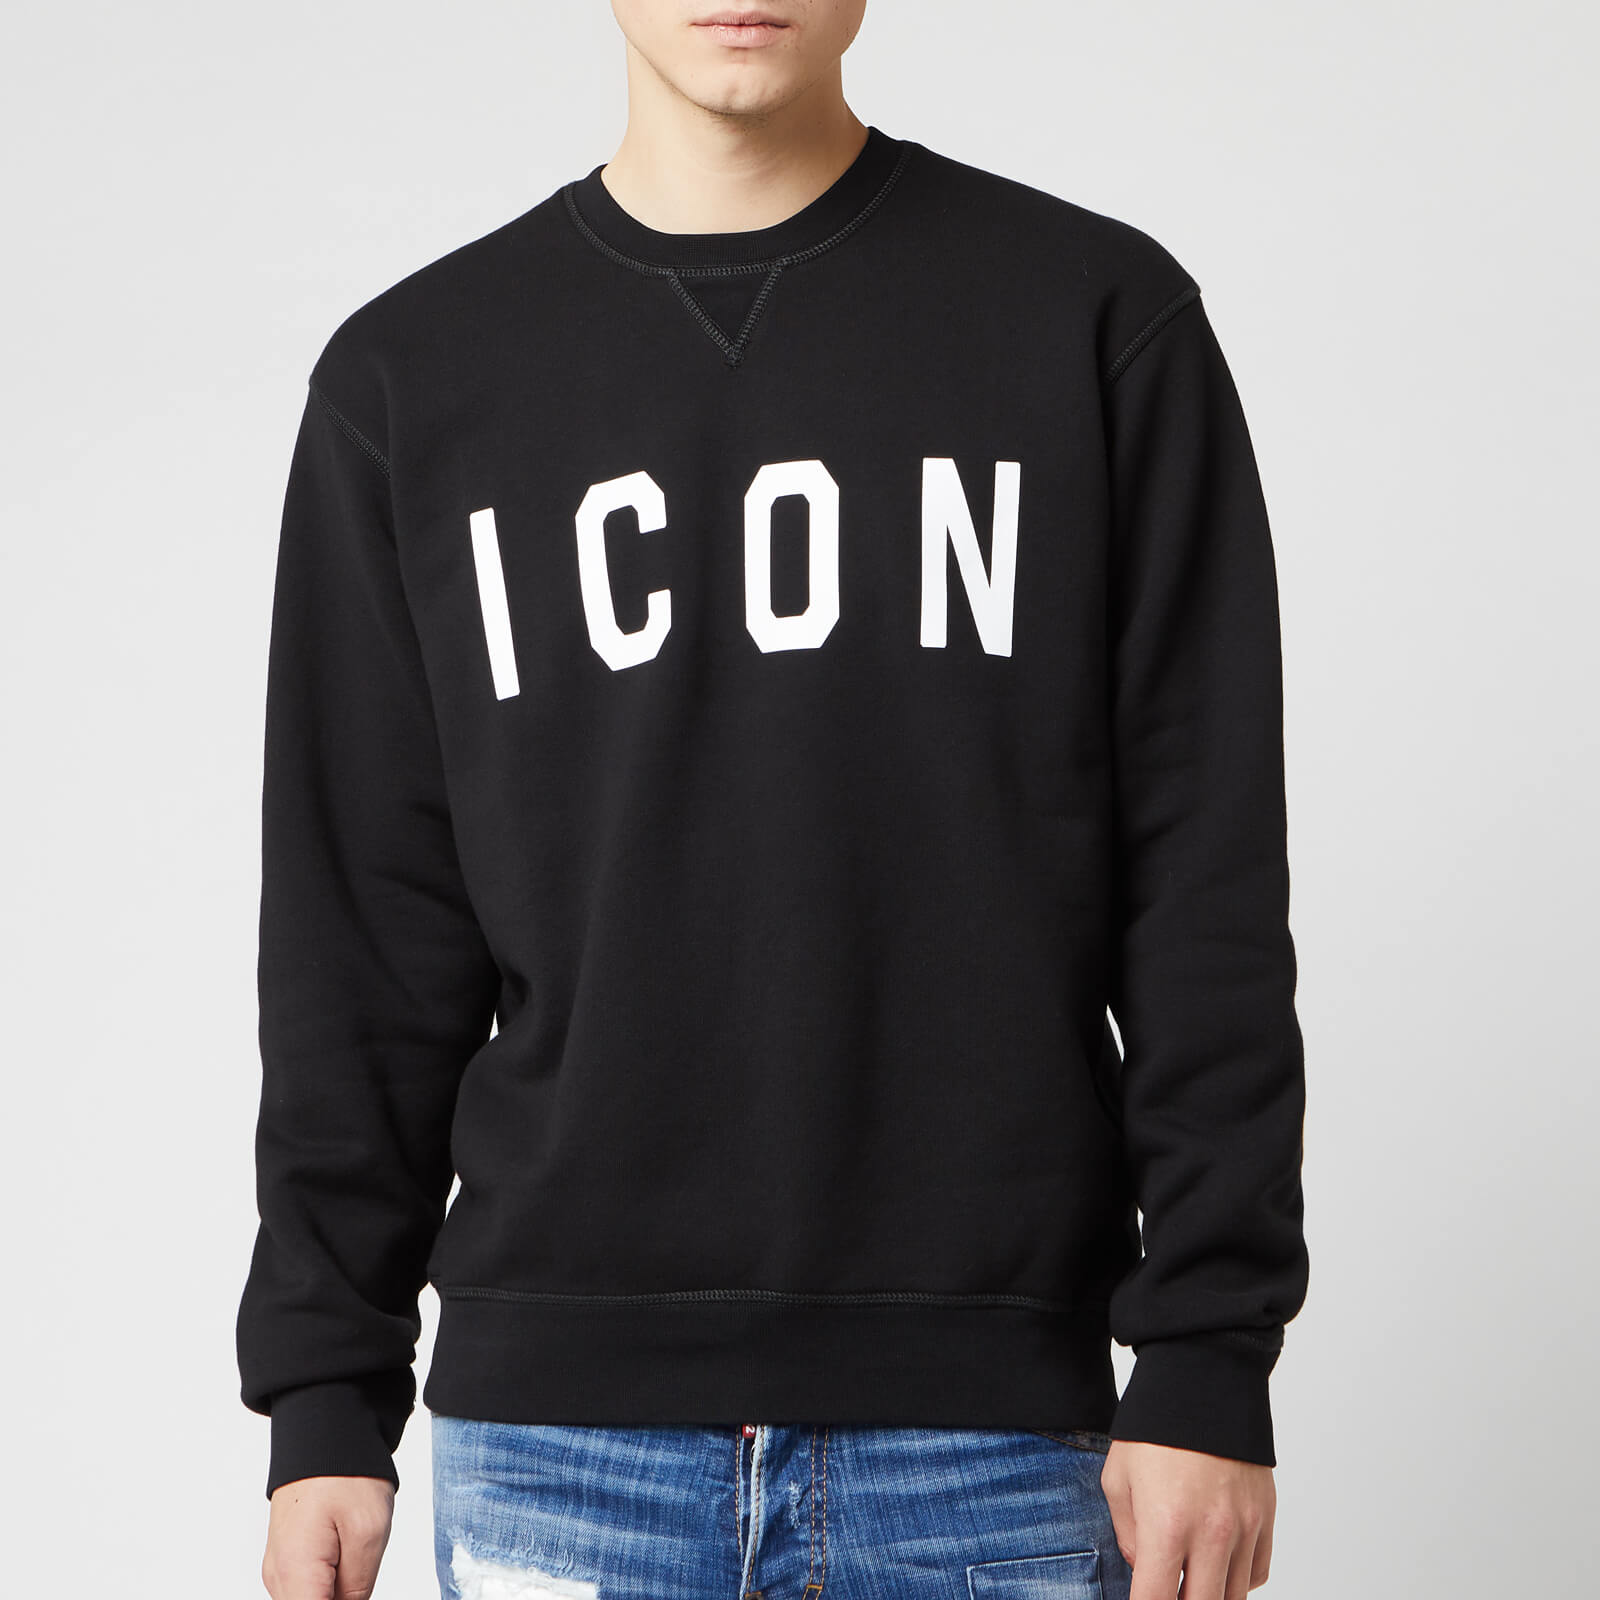 dsquared icon sweatshirt black